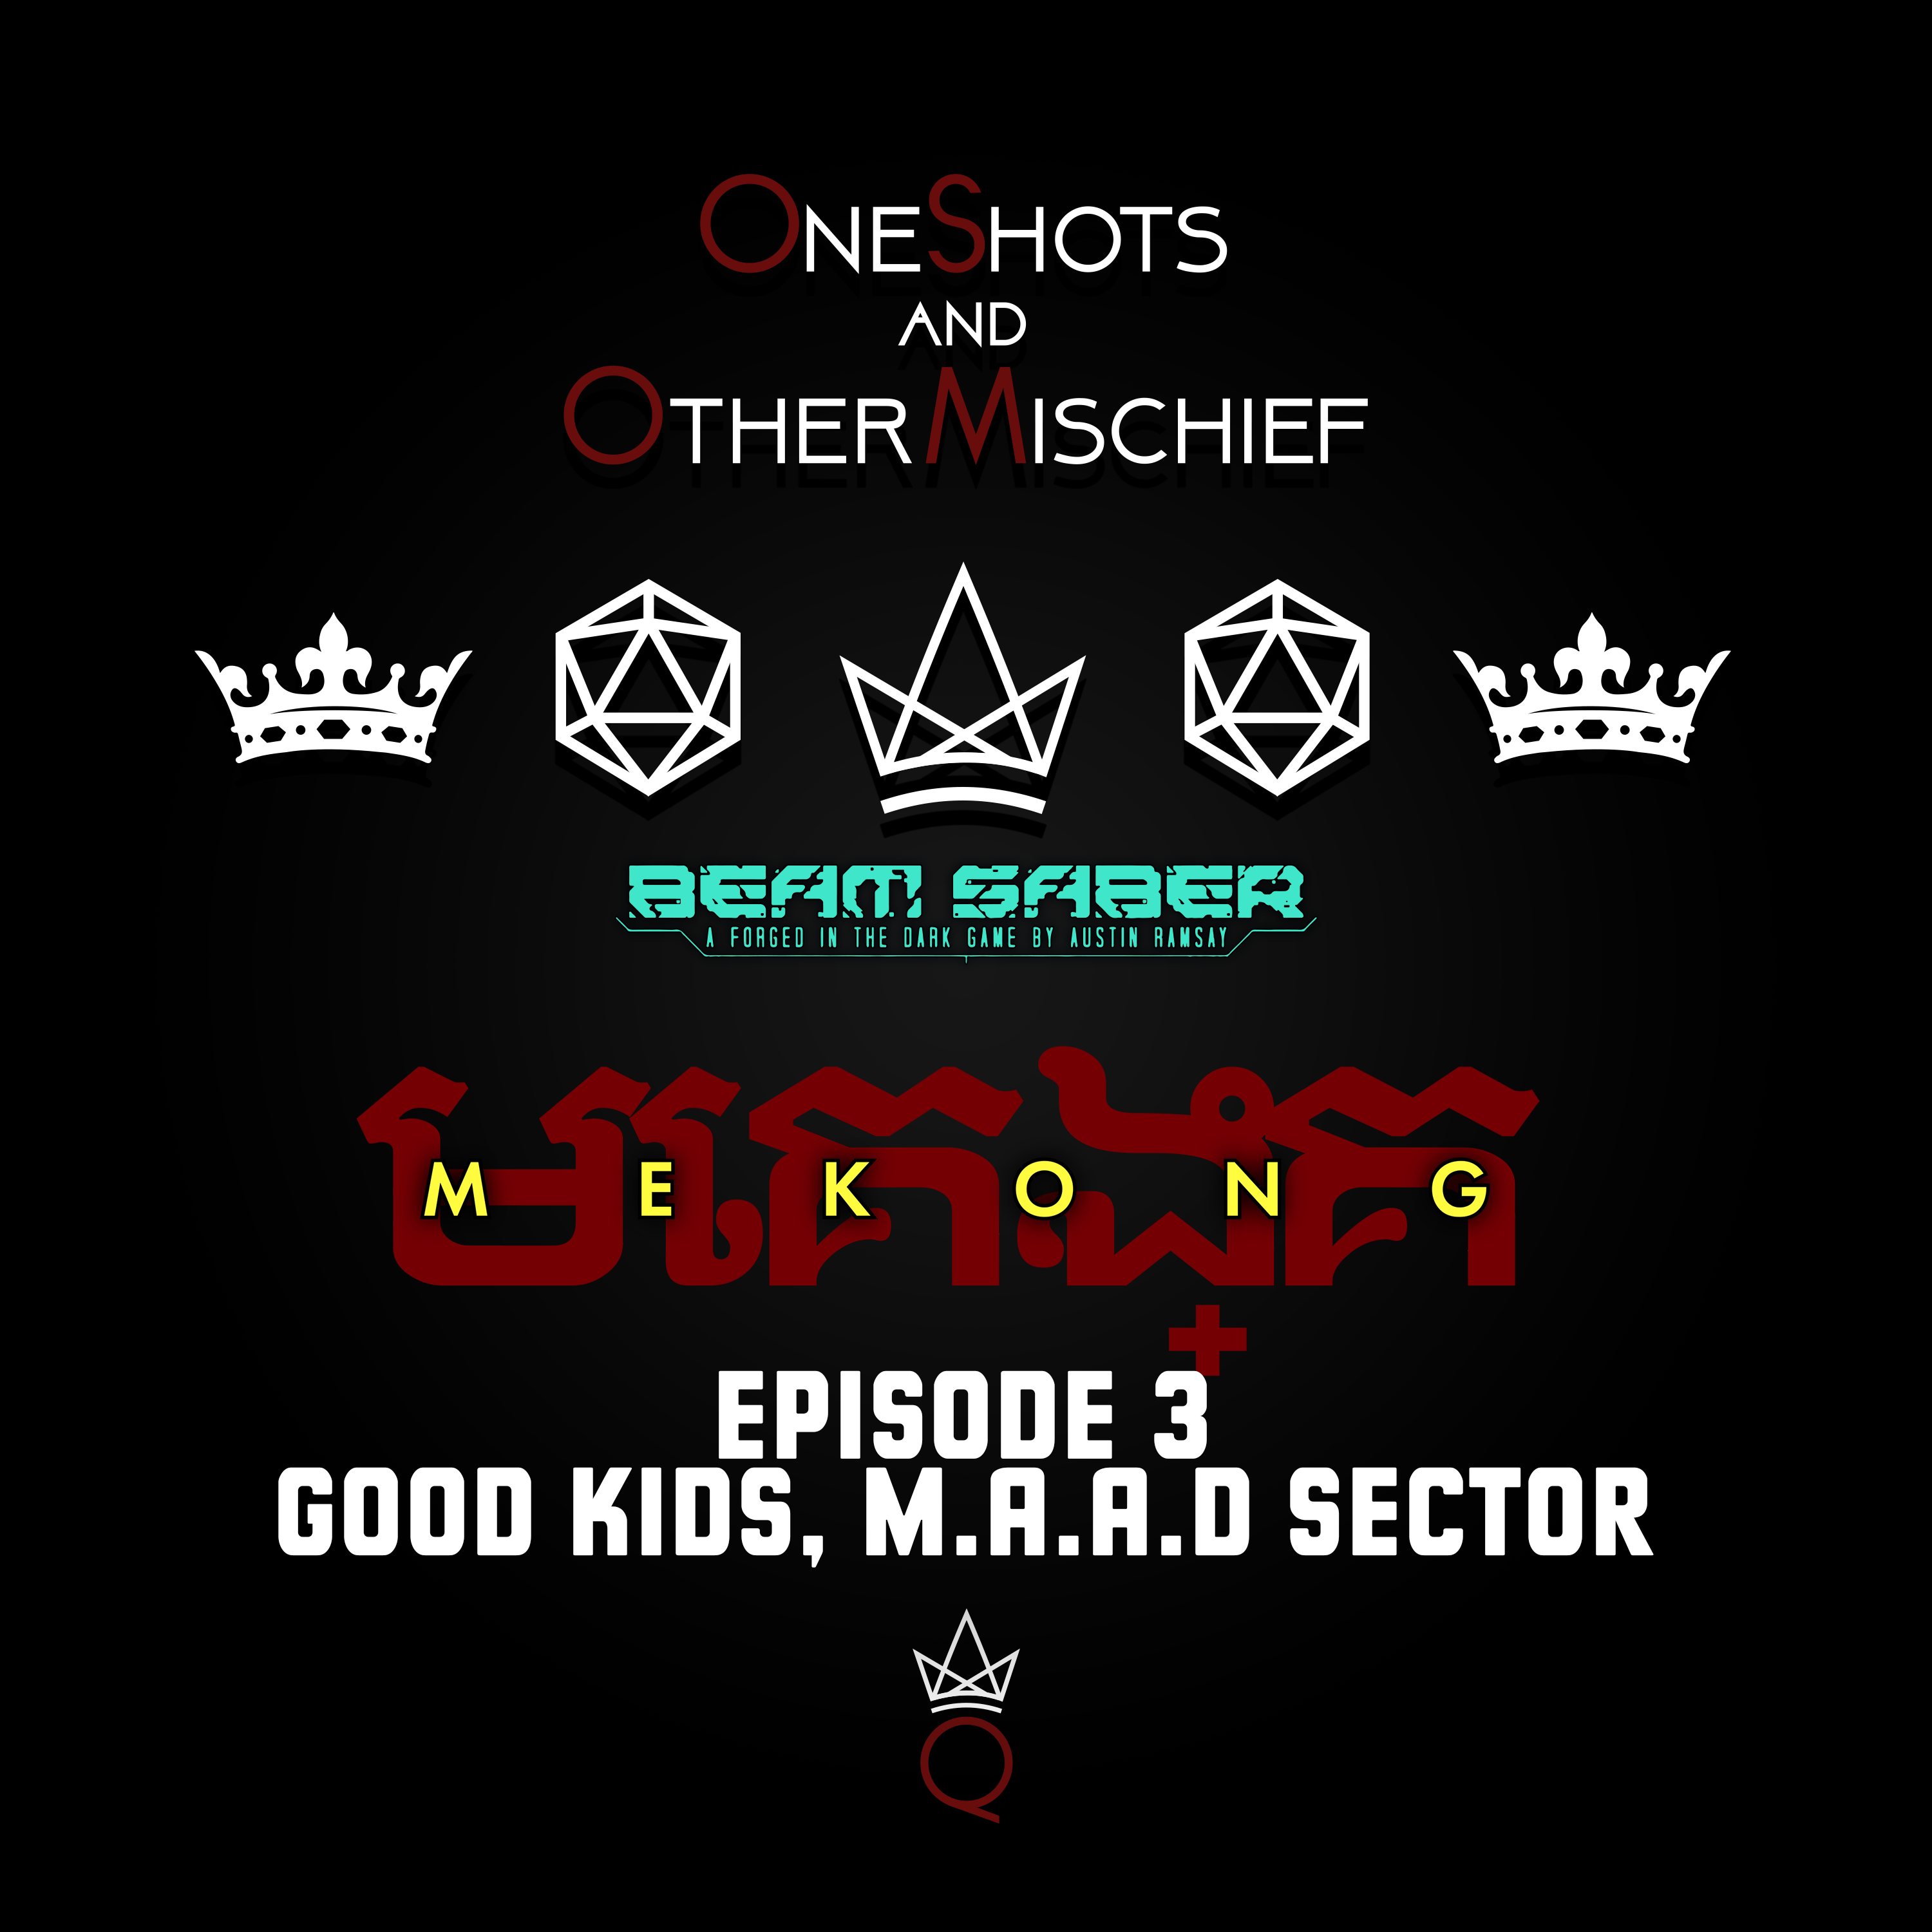 Beam Saber - MEKONG: Symphony for the Devil, Episode 3 [Good Kids, m.A.A.d Sector]